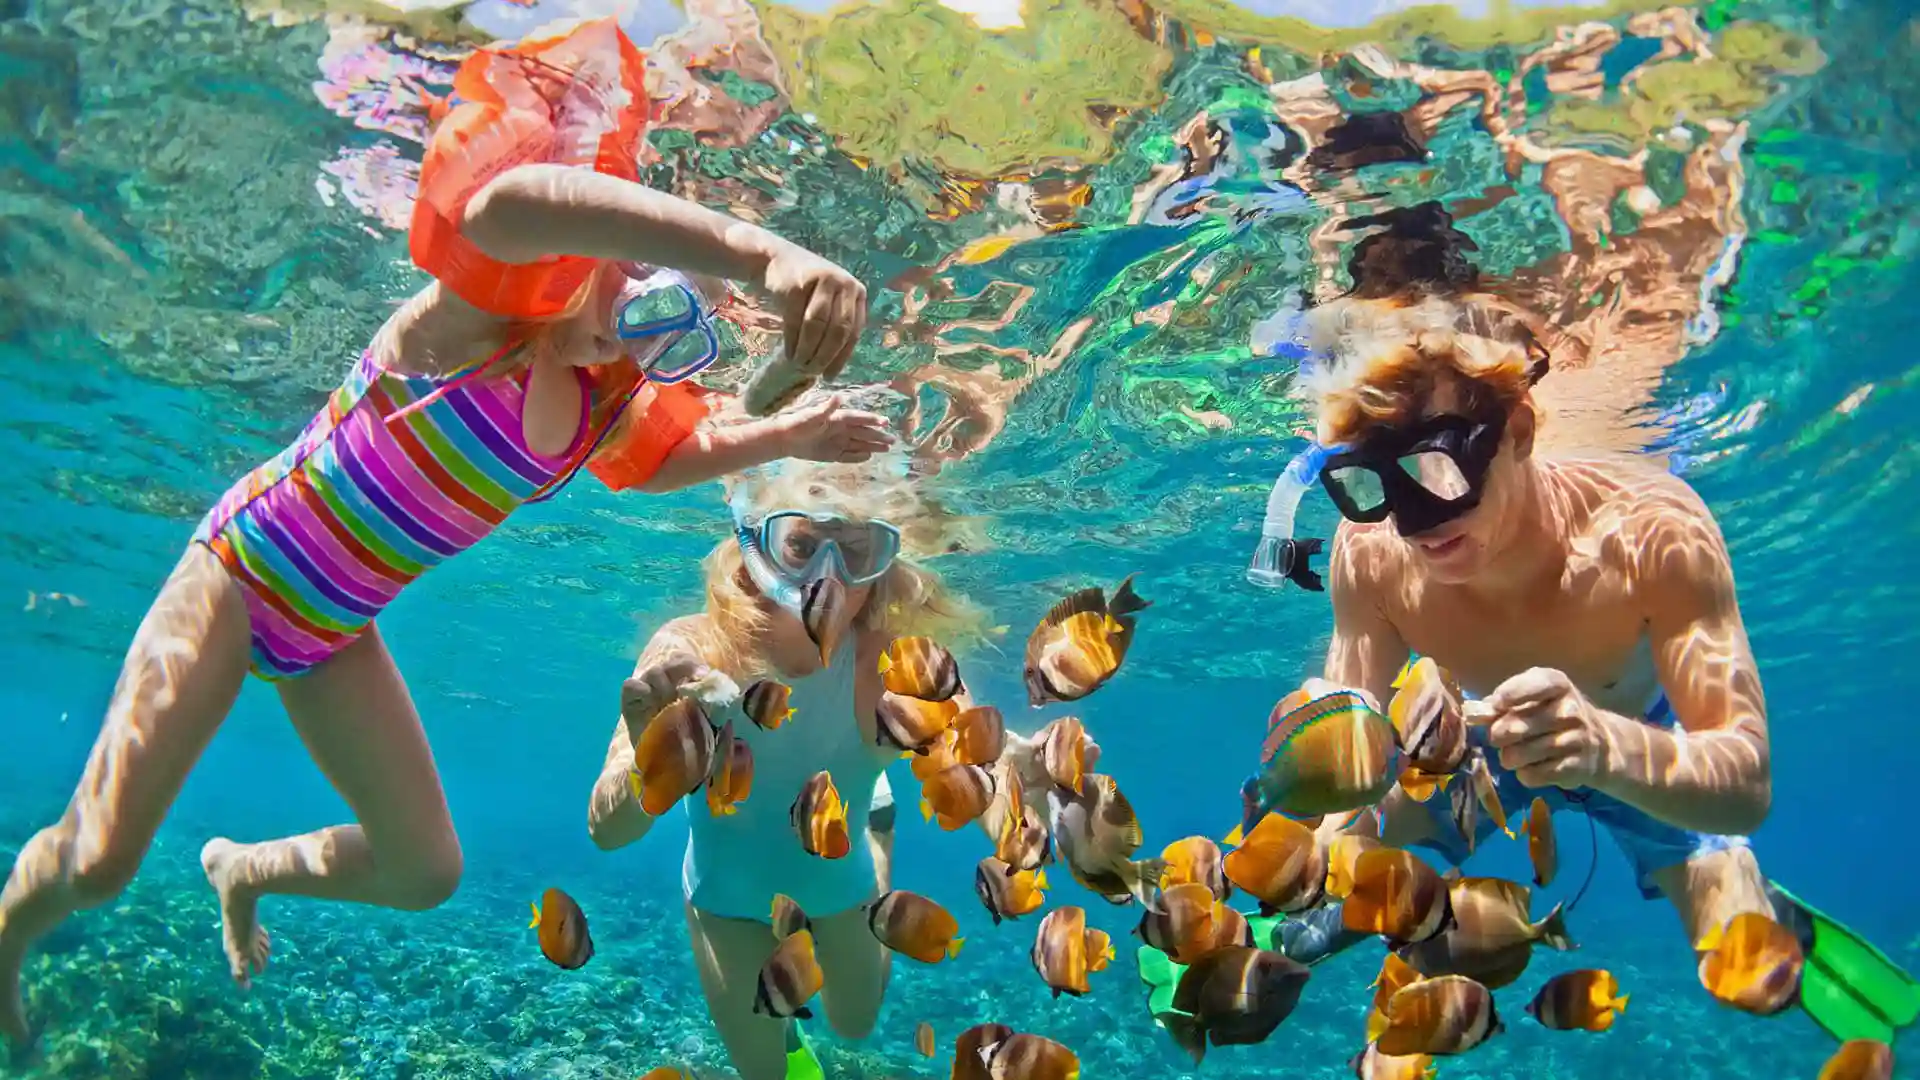 People snorkeling near orange-colored tropical fish.